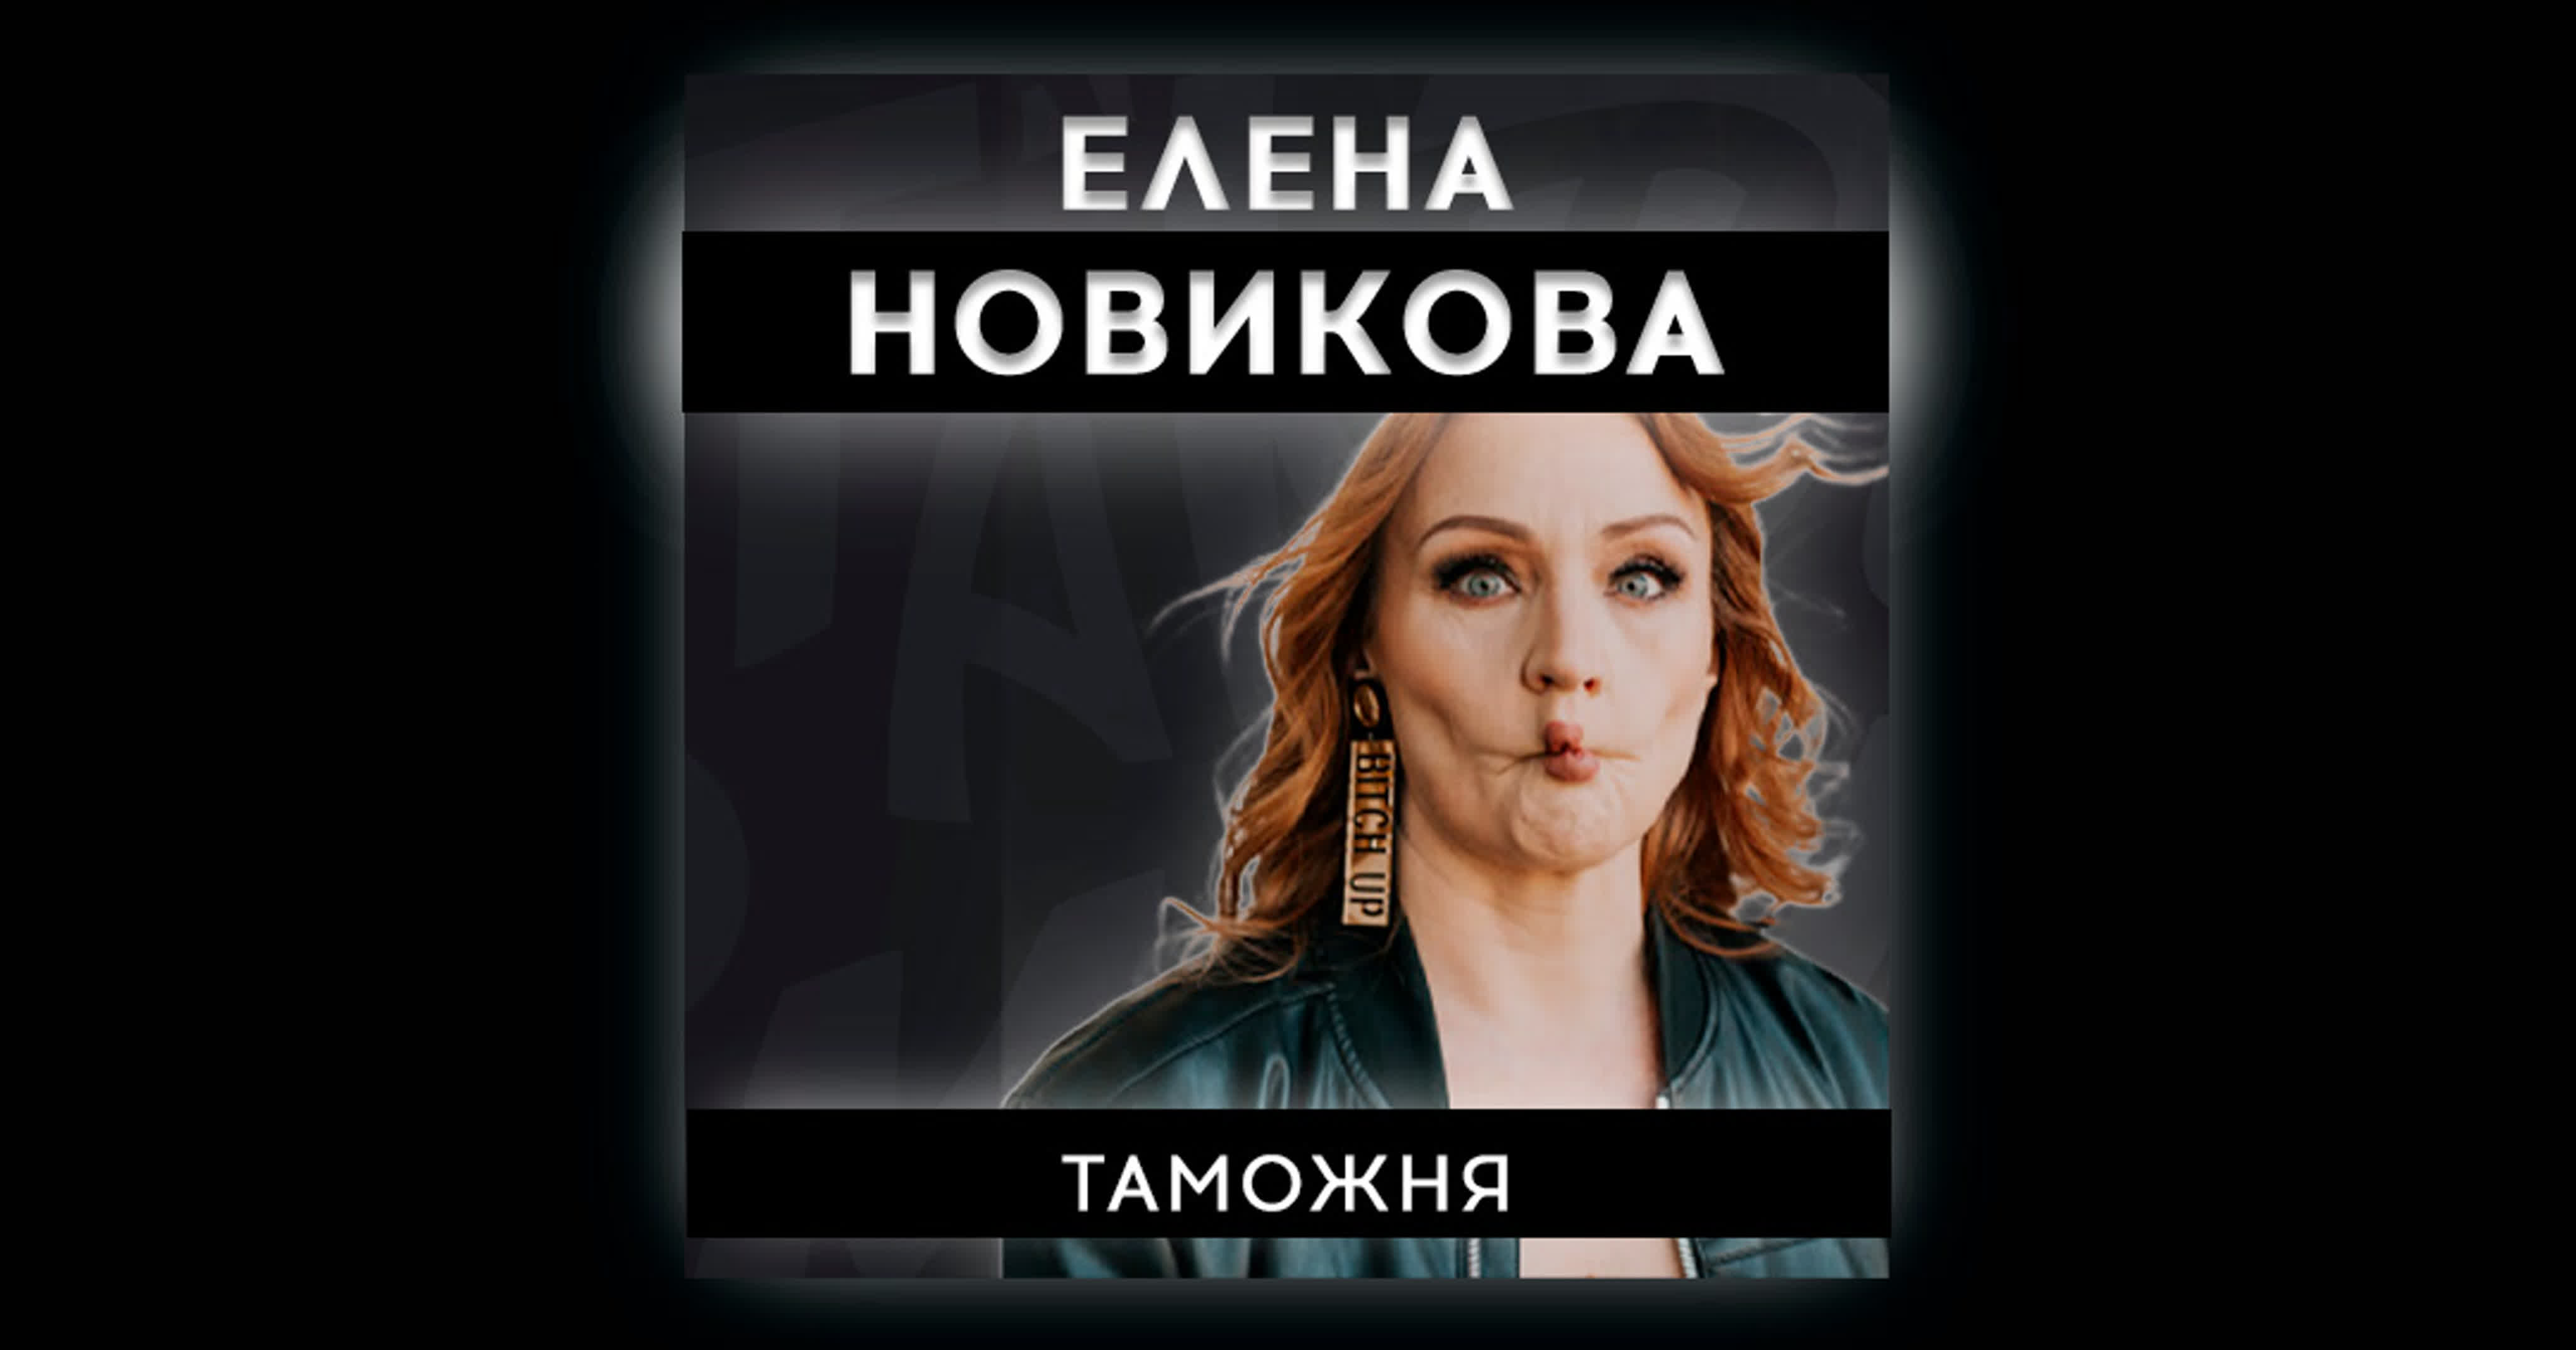 Елена новикова standup msk standup - ExPornToons